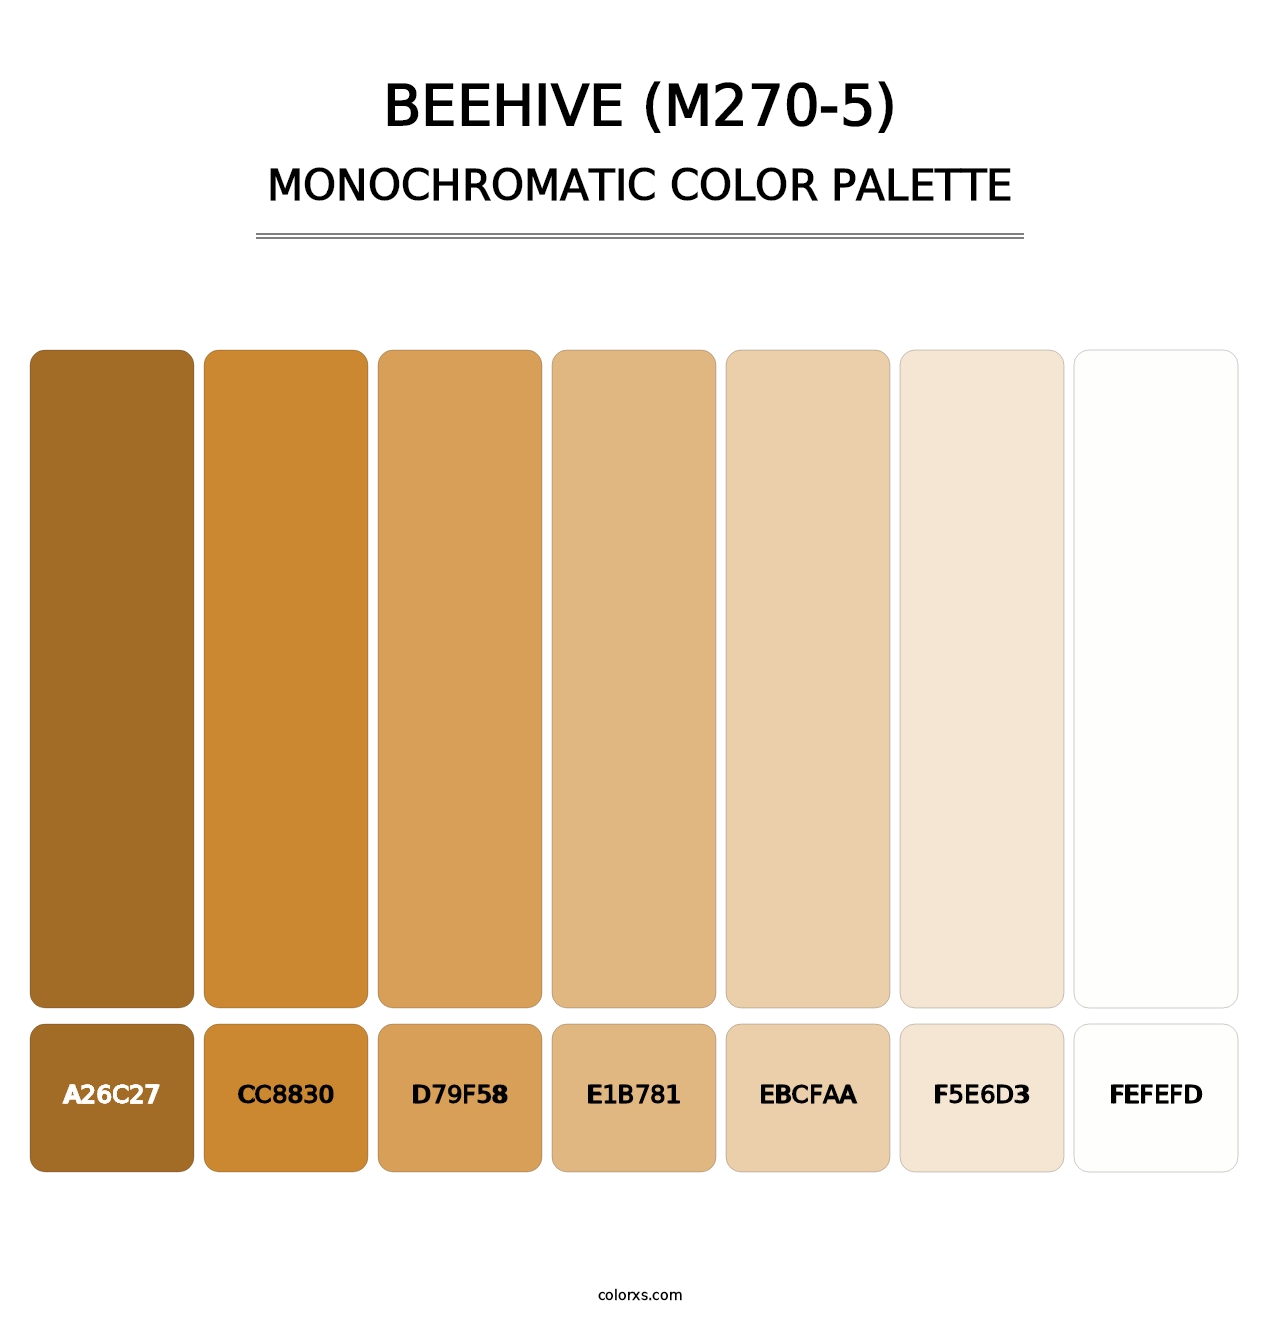 Beehive (M270-5) - Monochromatic Color Palette